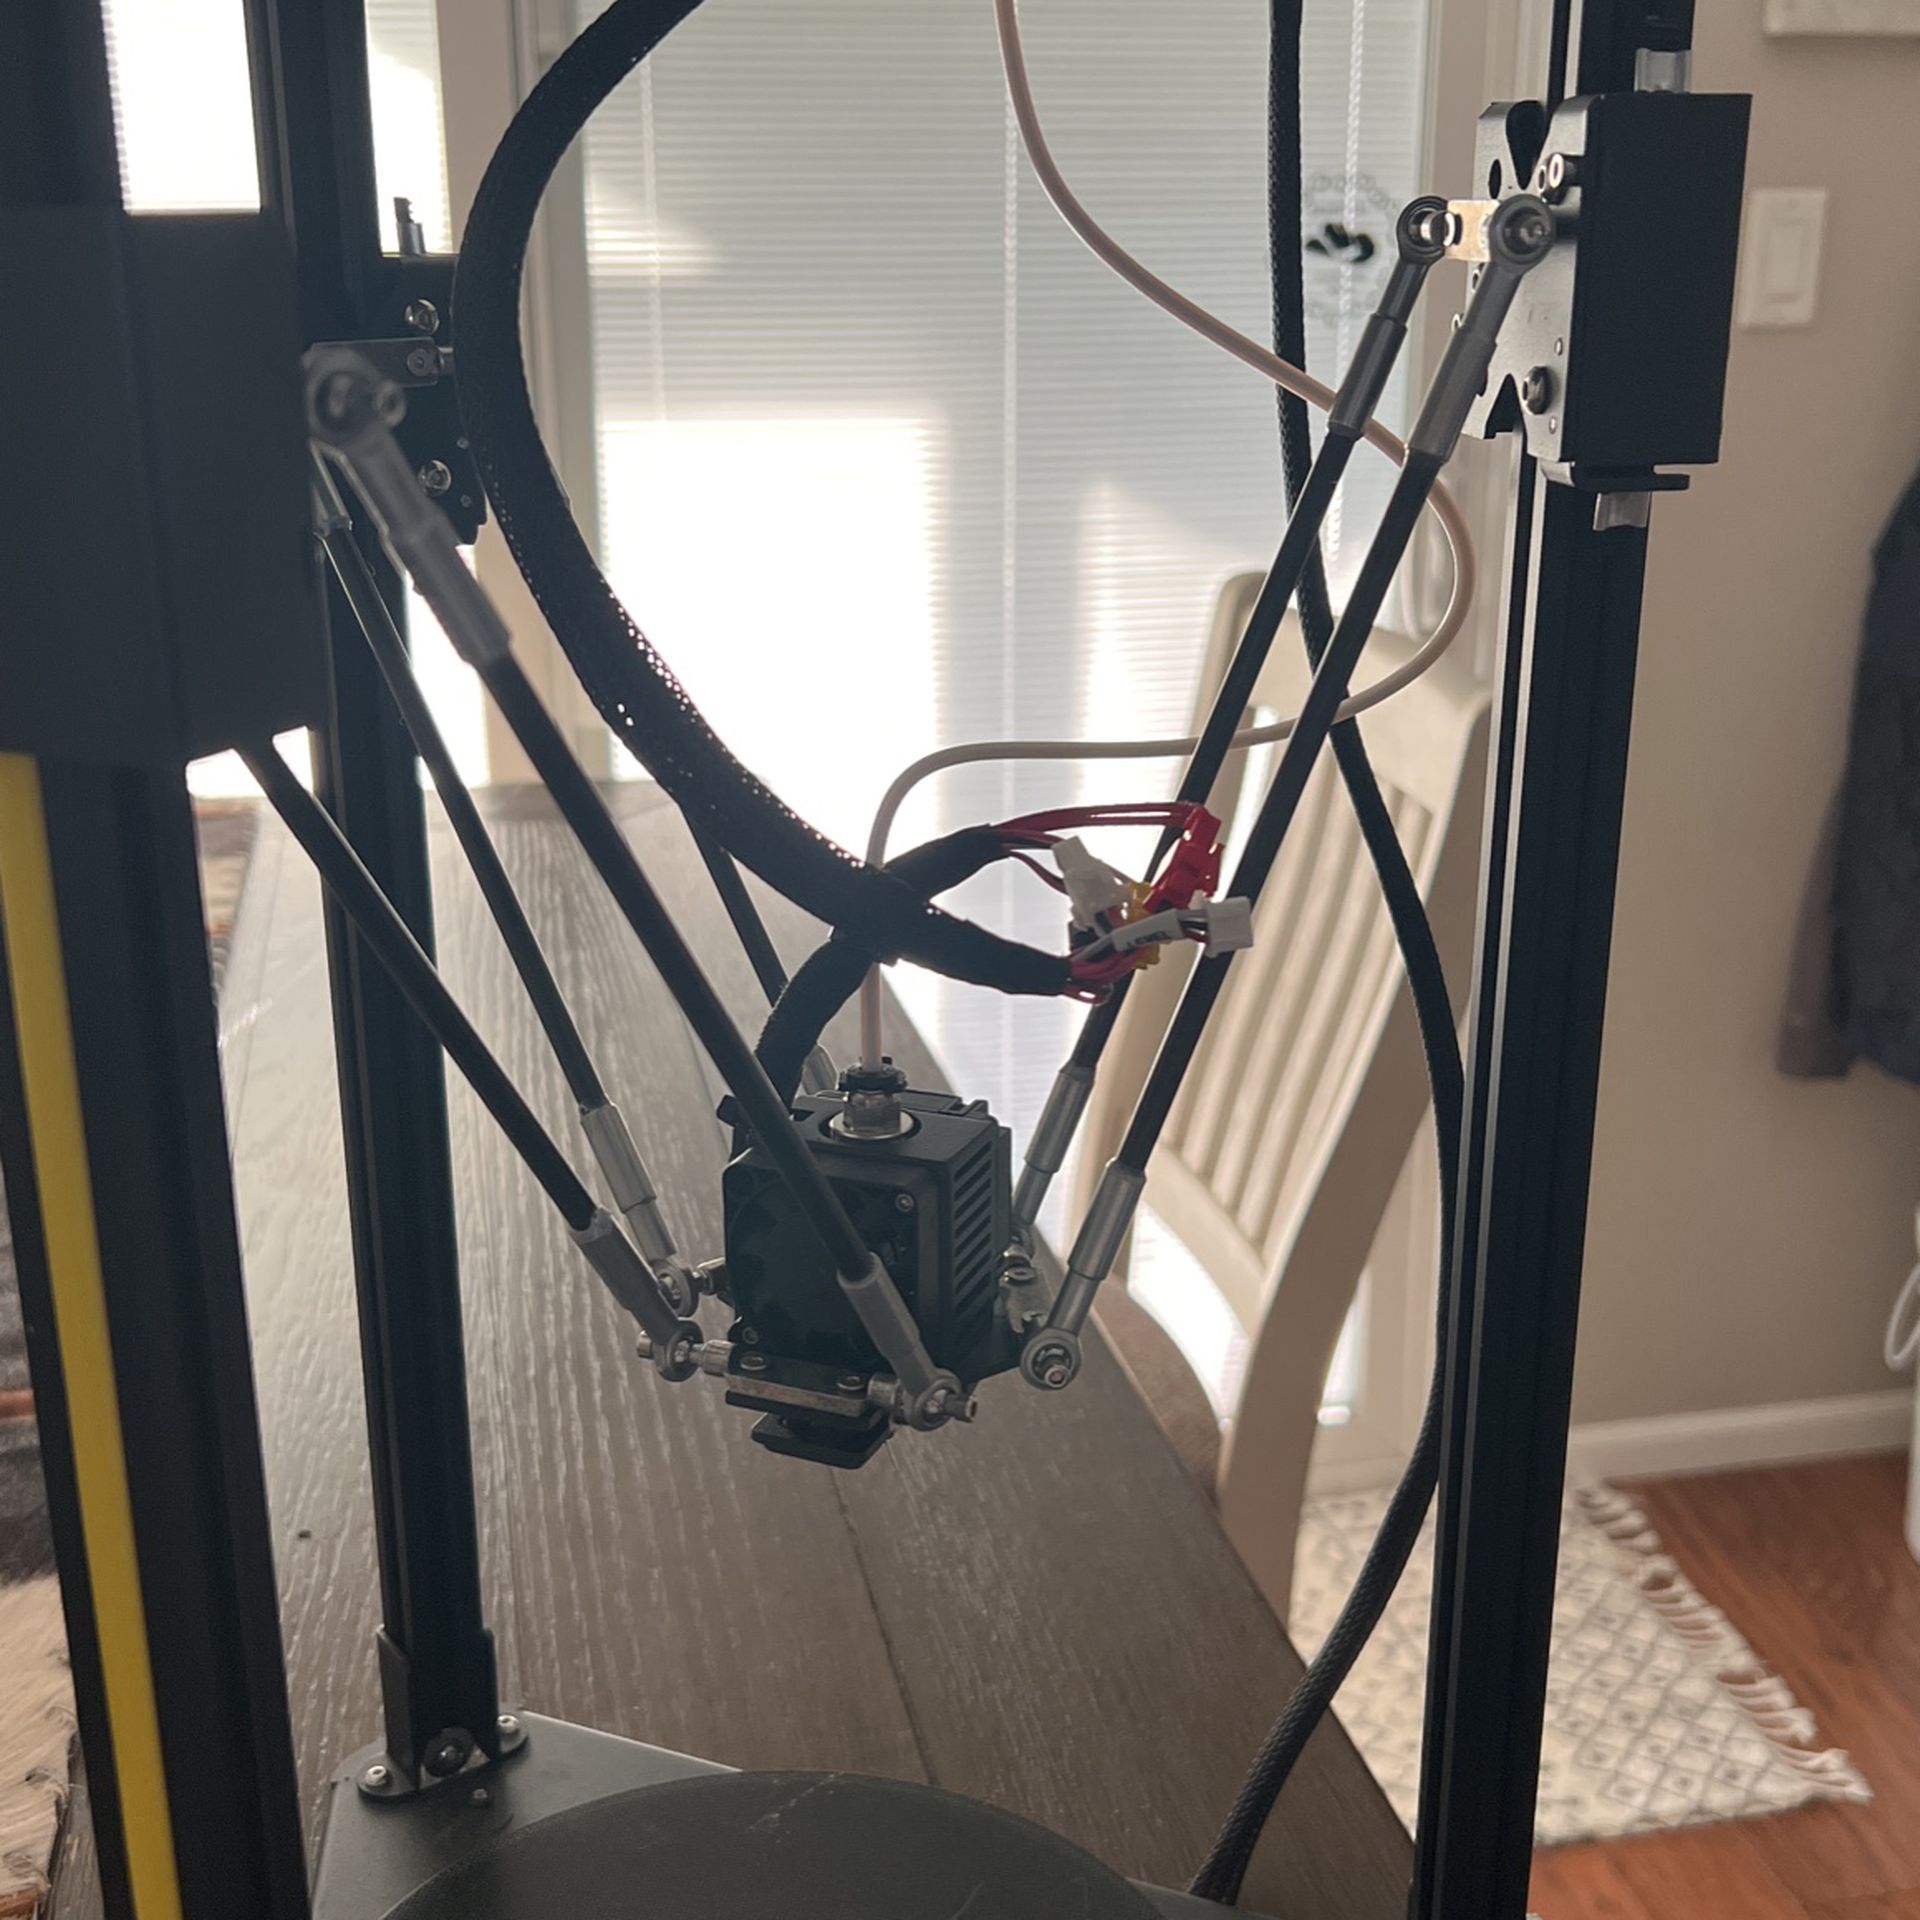 Flsun Q5 auto leveling 3D printer